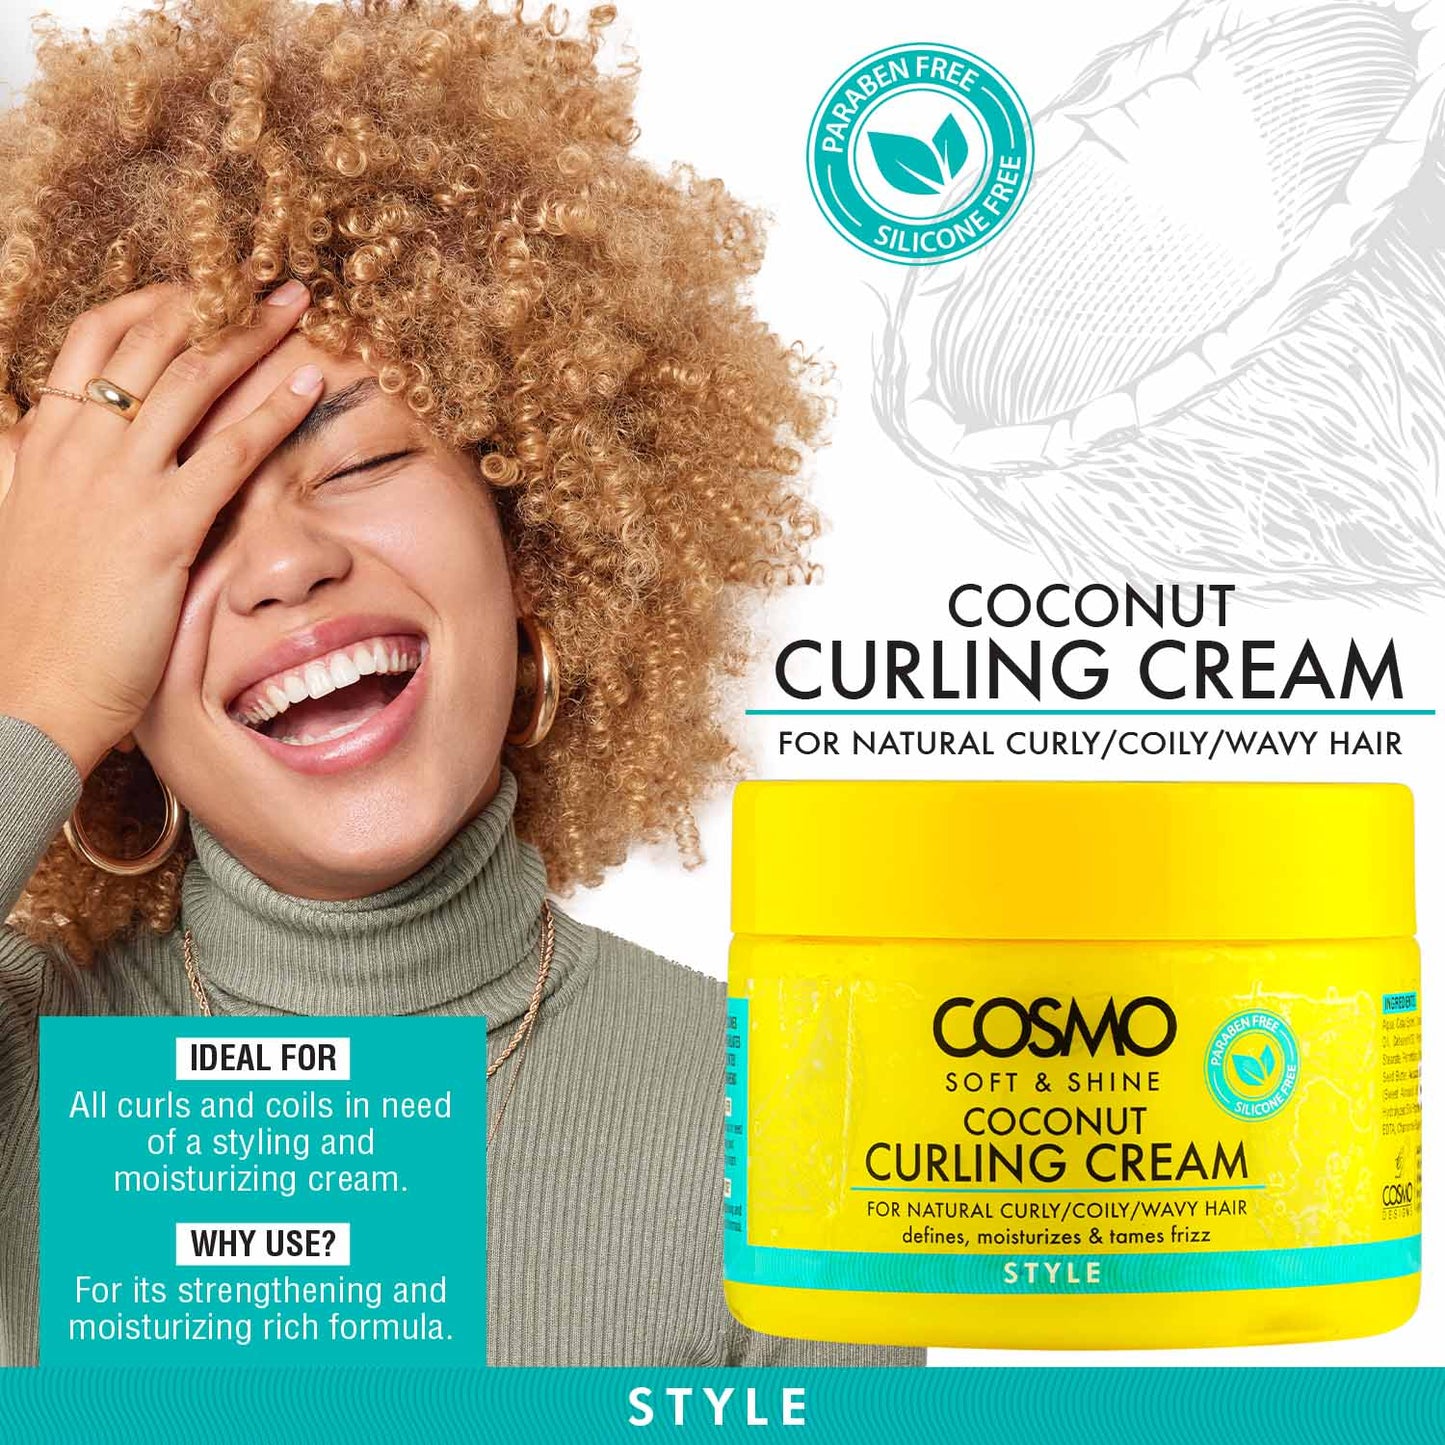 COSMO SOFT & SHINE COCONUT CURLING CREAM STYLE – 325G